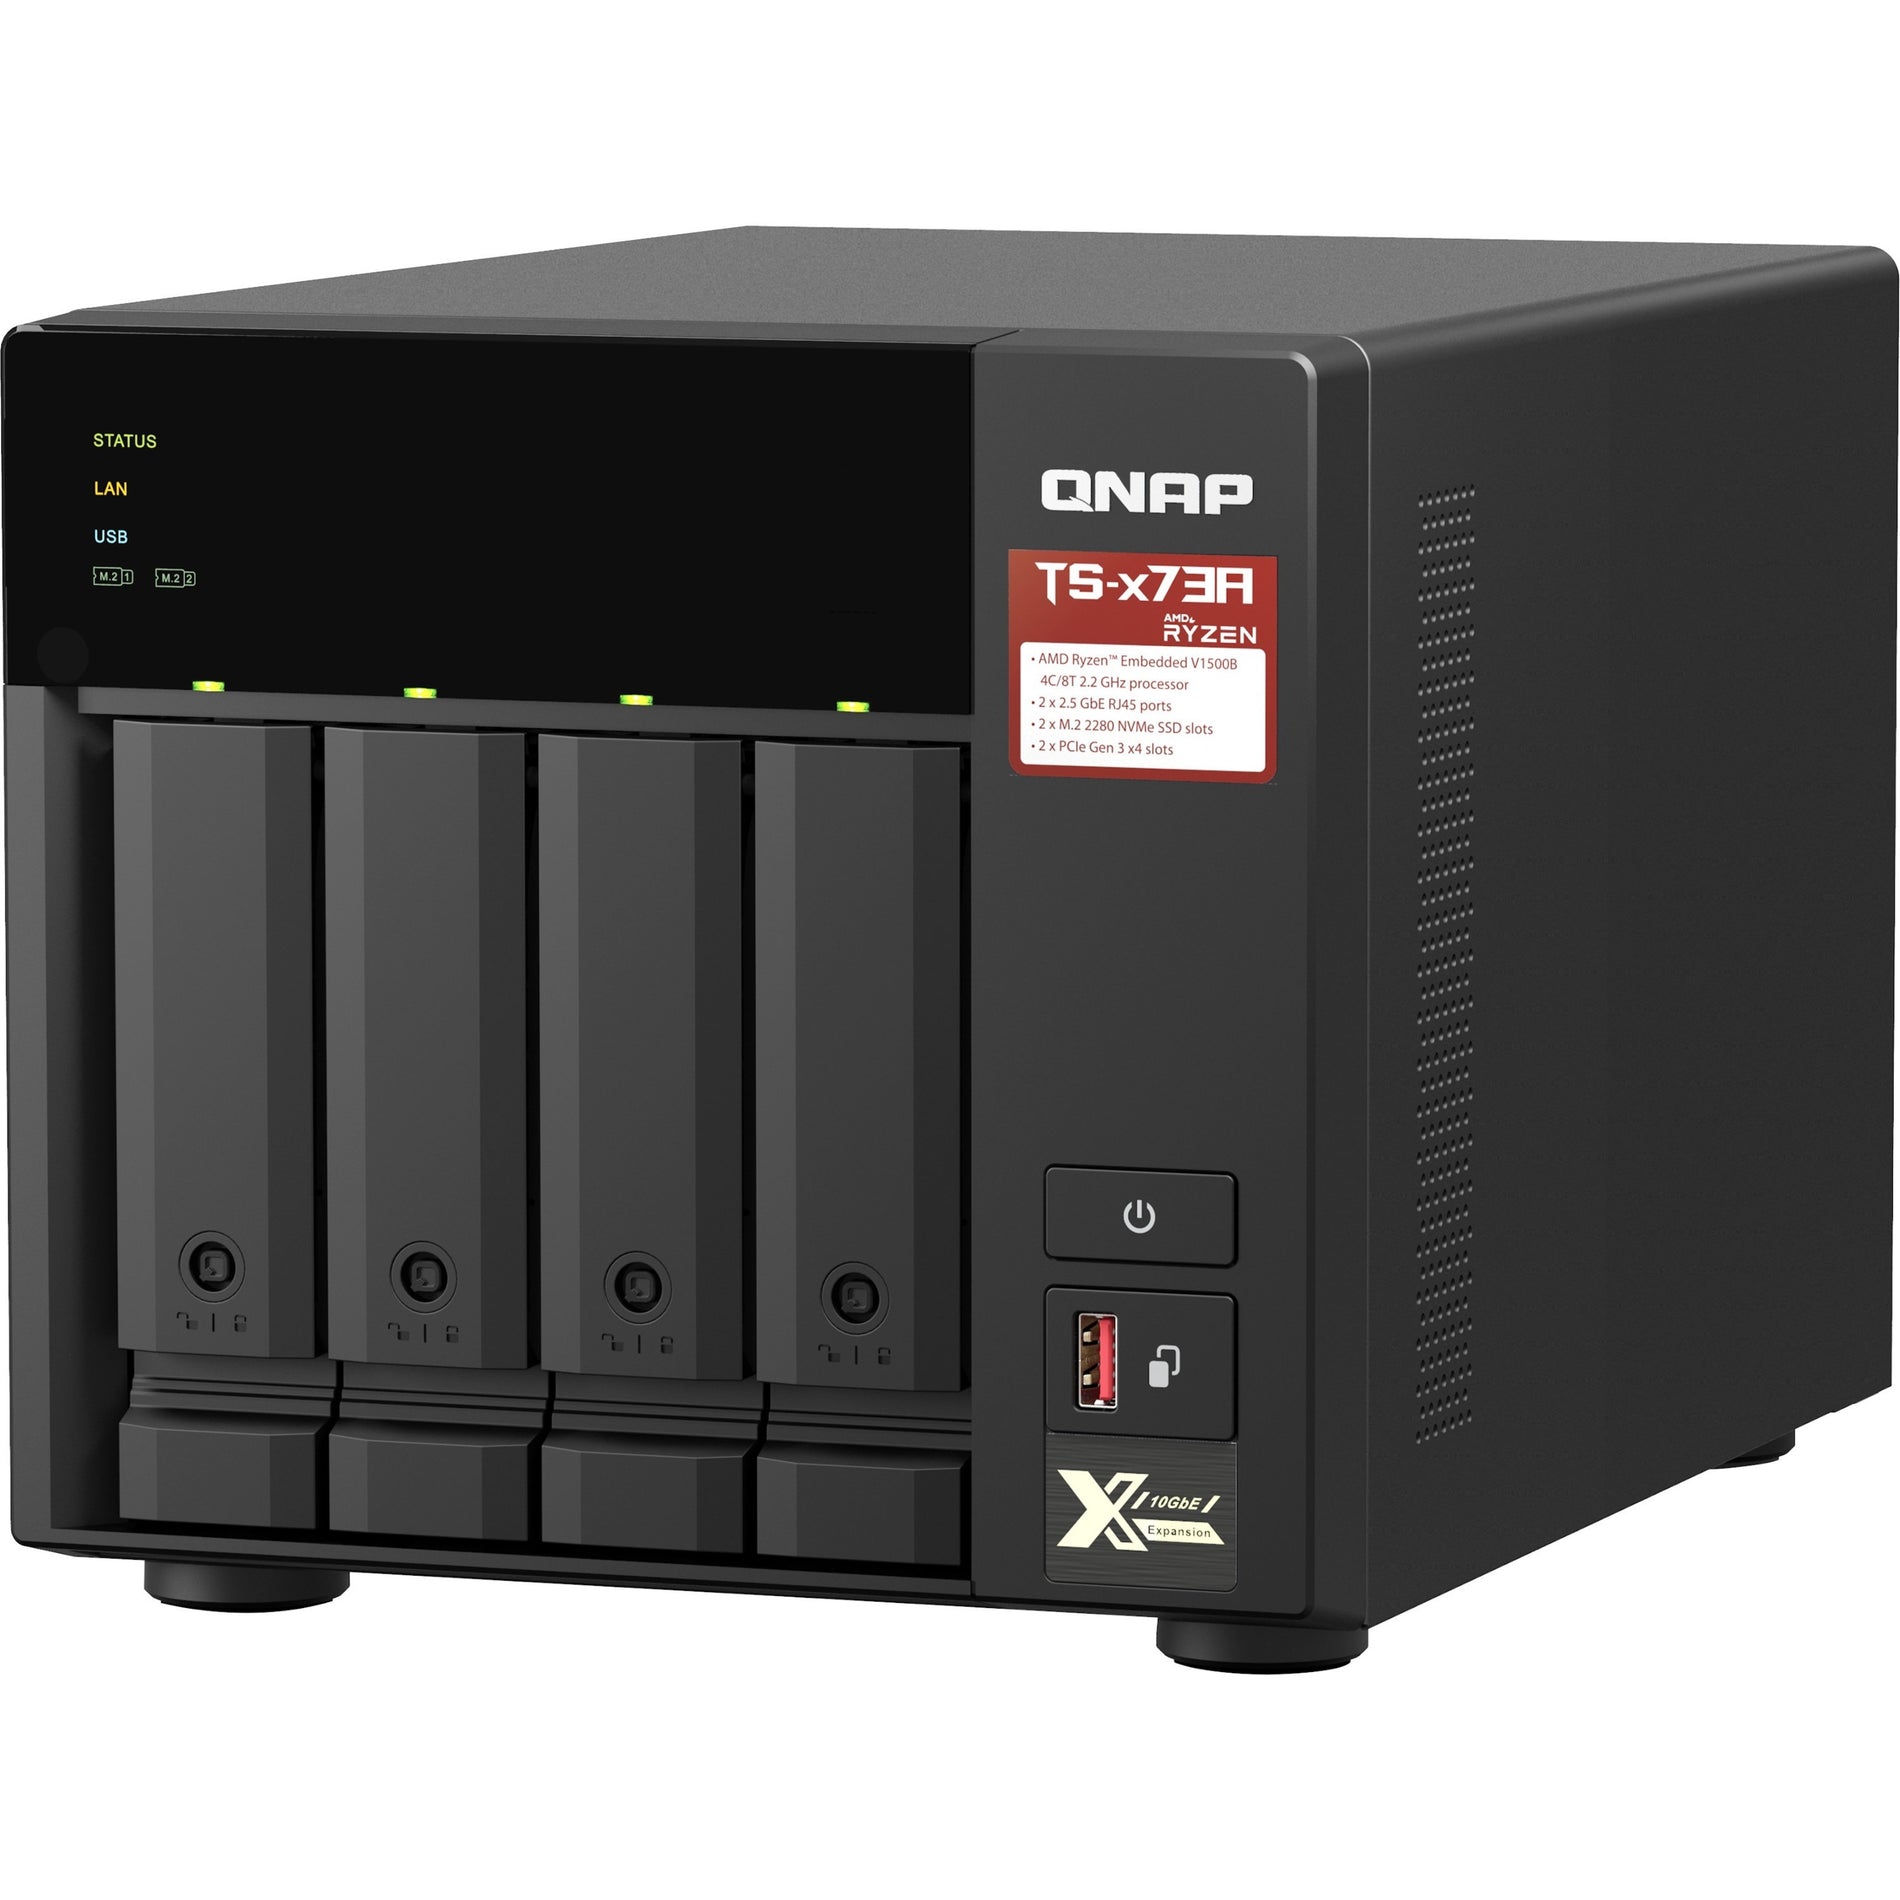 QNAP TS-473A-8G-US TS-x73A SAN/NAS Storage System, Quad-core Ryzen V1500B, 8GB DDR4, 4-Bay, 2.5GbE Ethernet, QTS 4.5.1